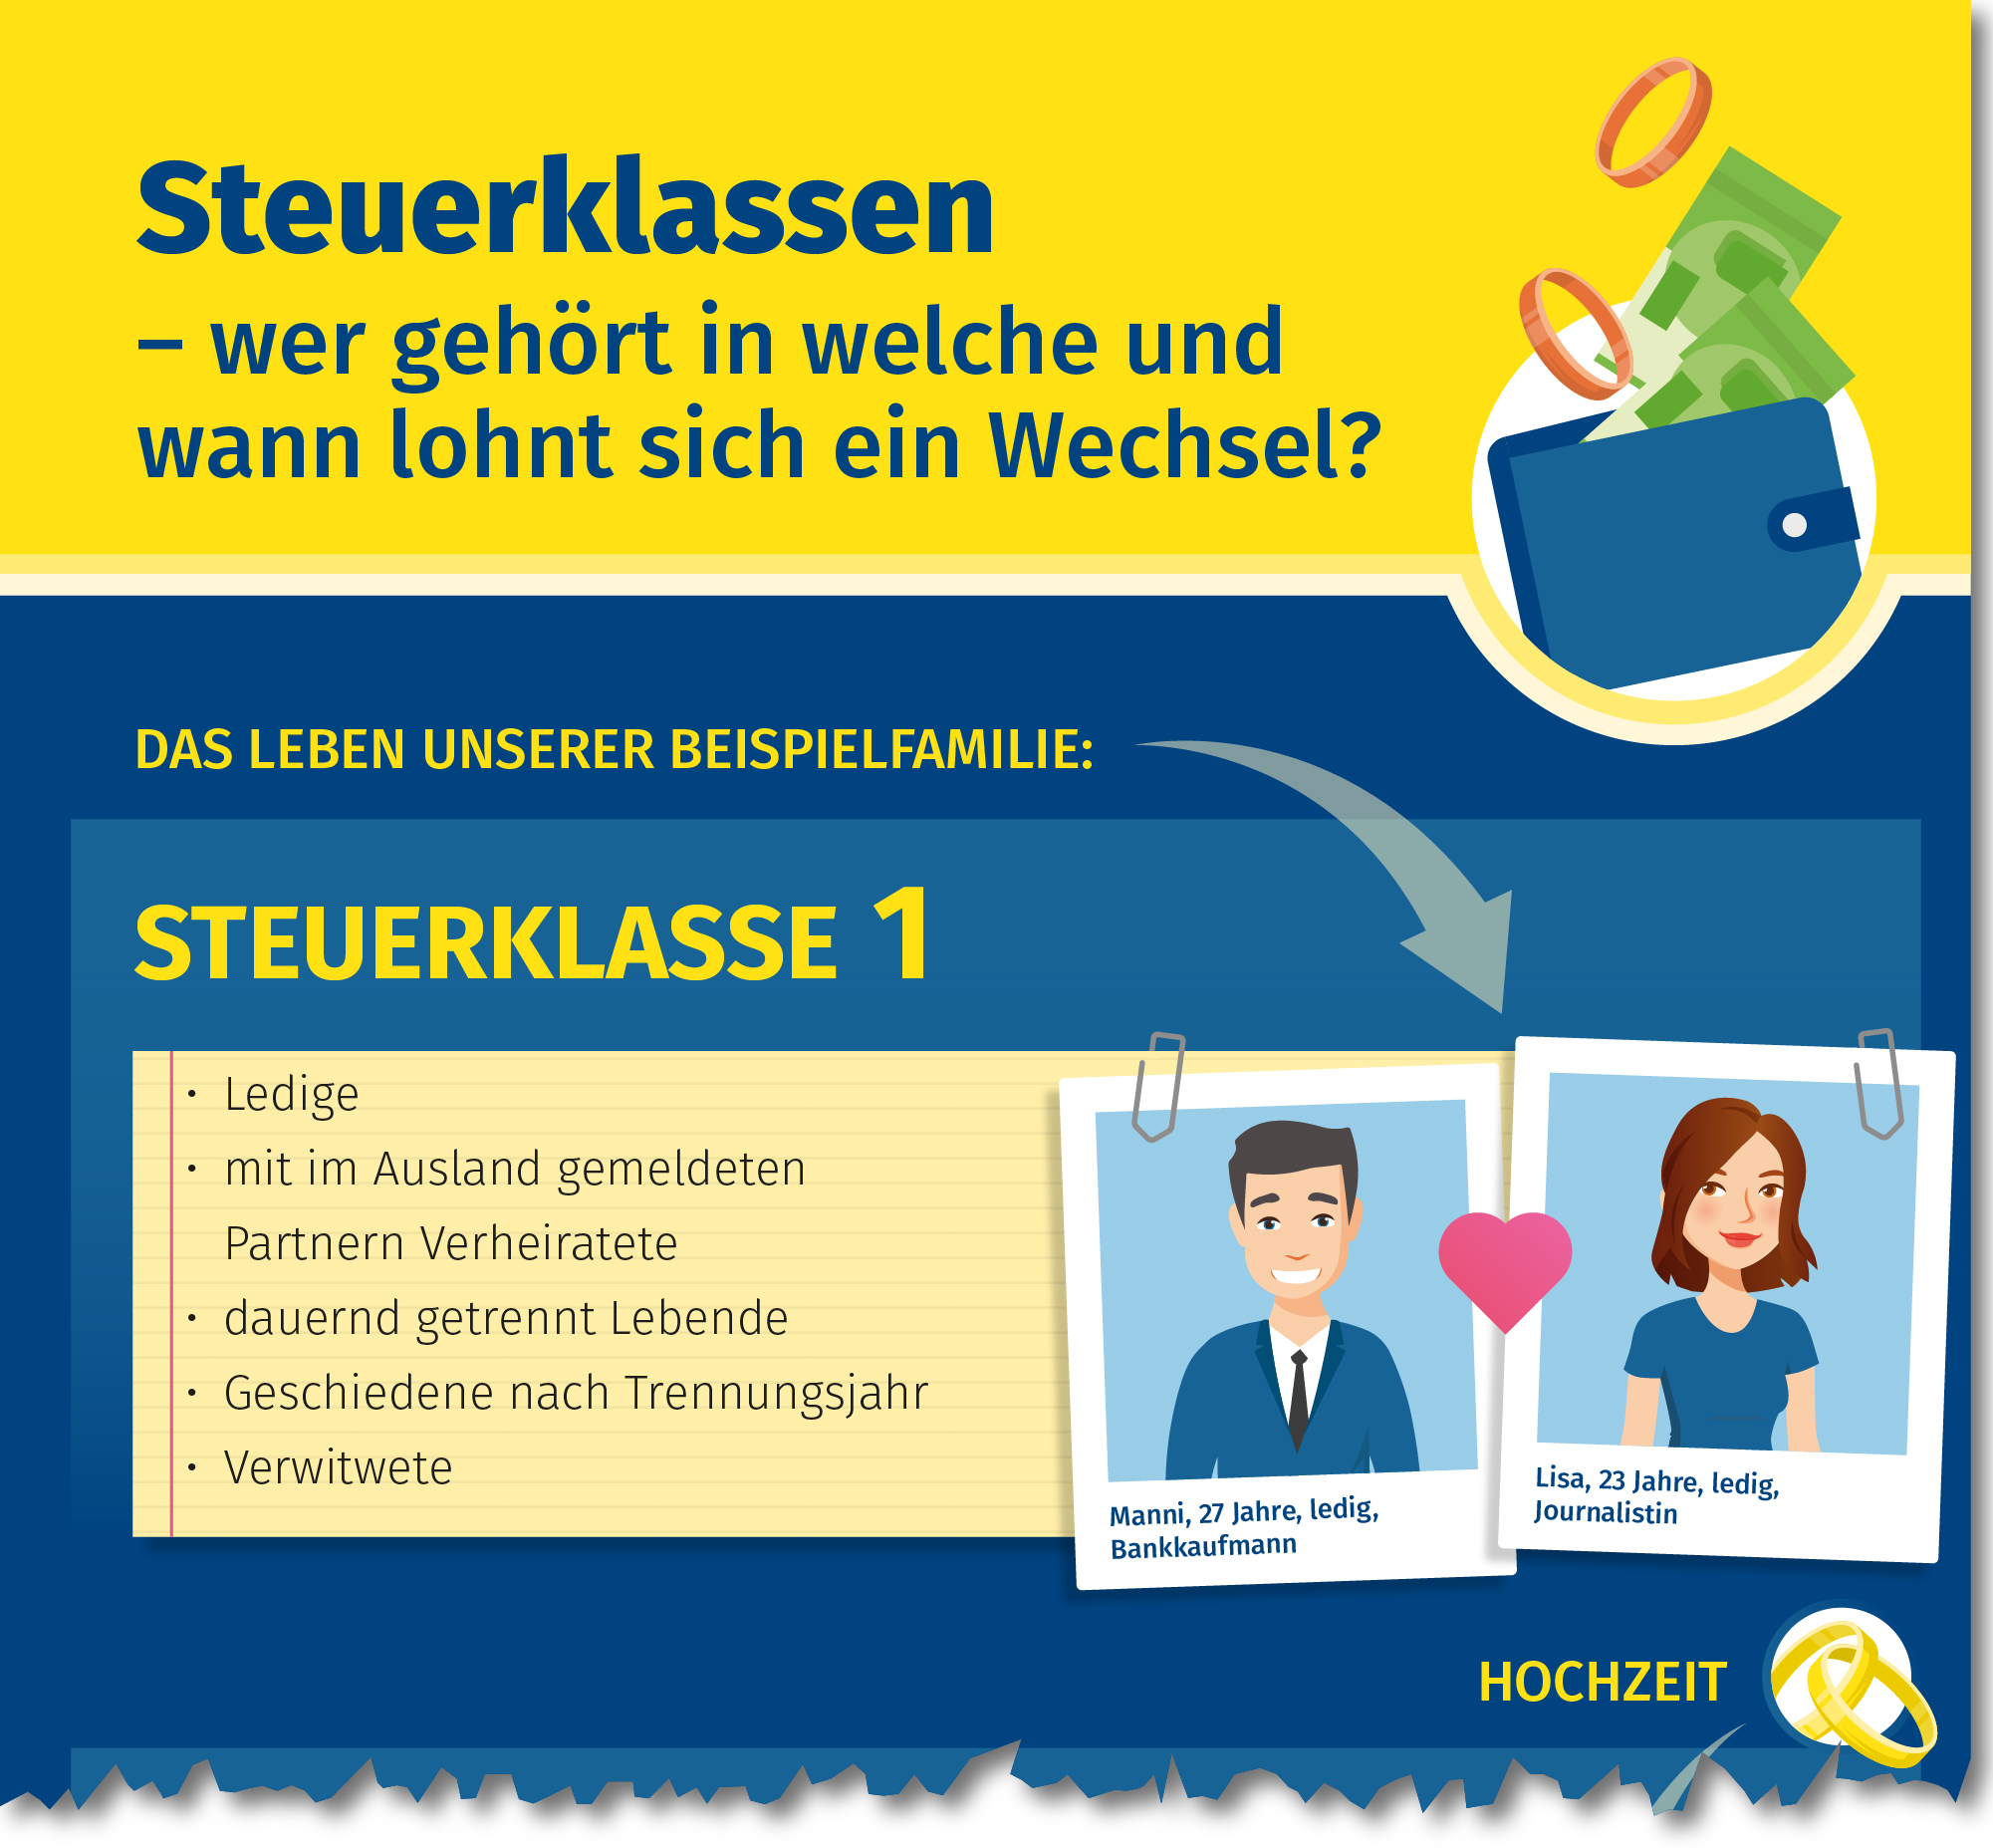 Steuerklassen_Steuerklassenwechsel_Infografik